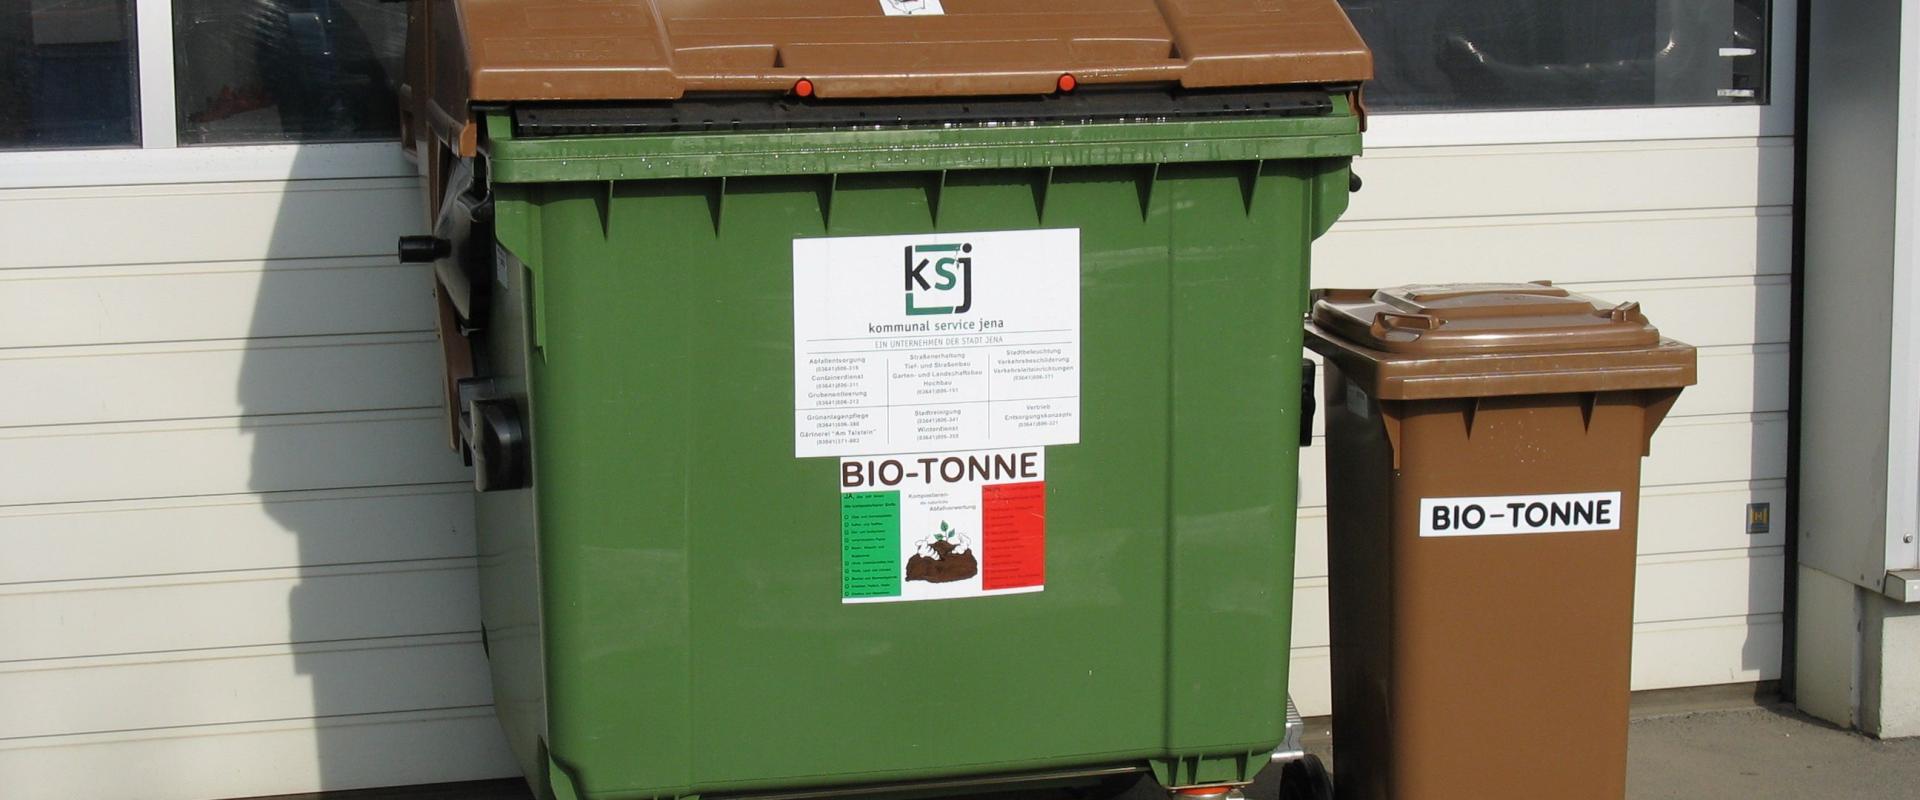 Biowaste containers